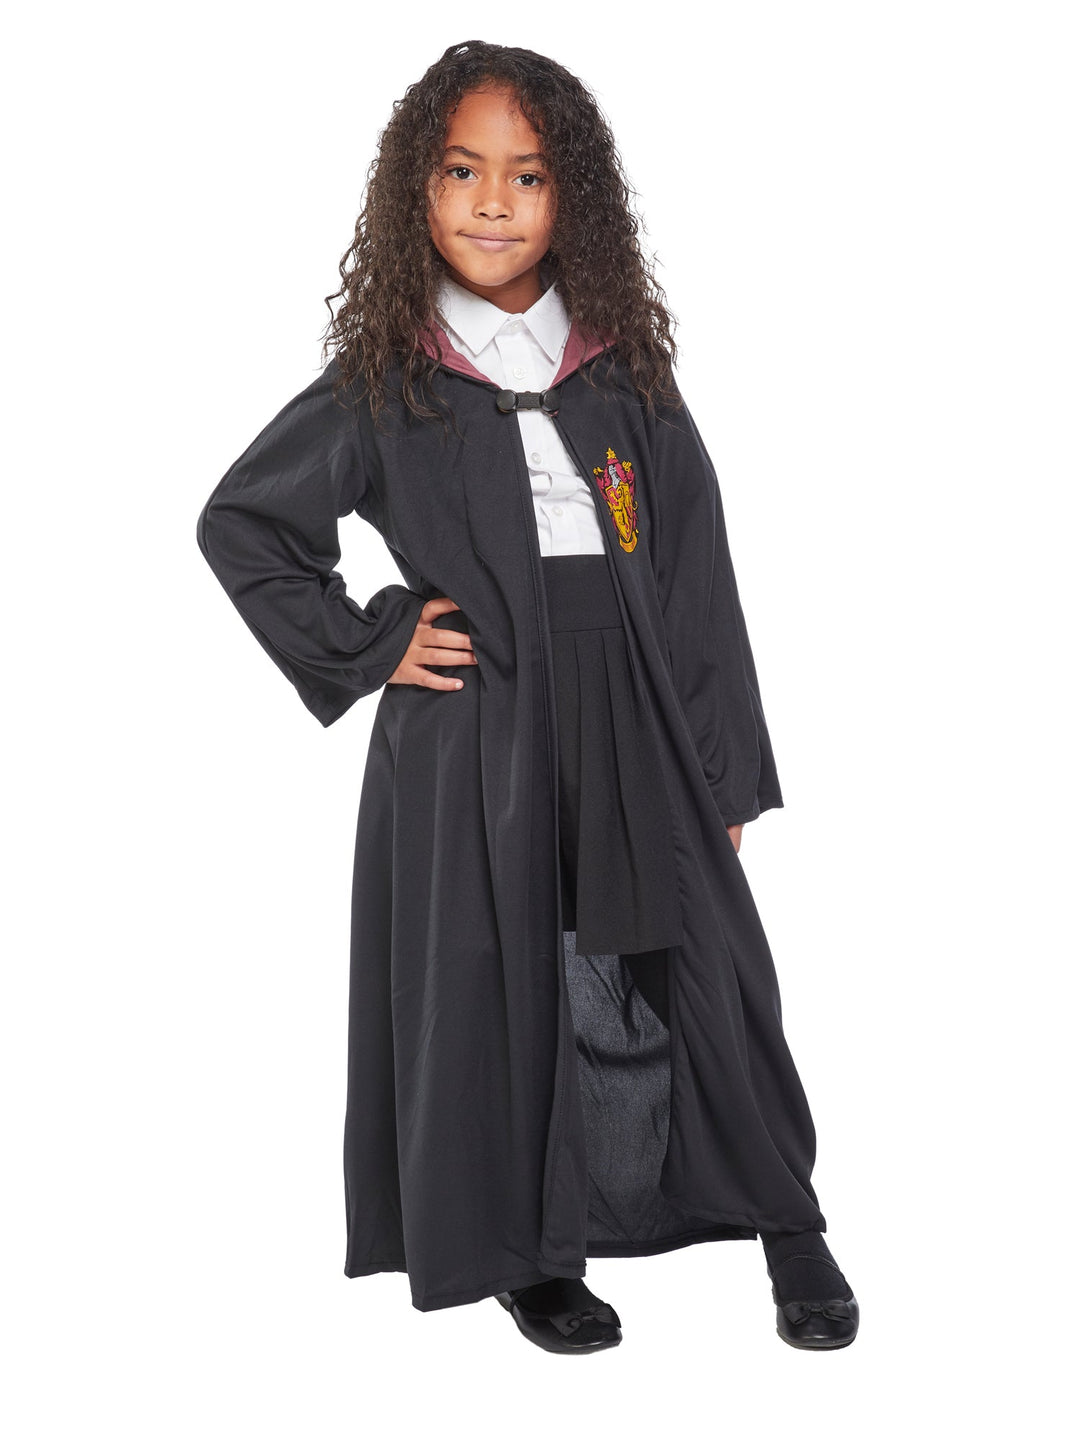 Gryffindor Robe for Kids Costume Harry Potter_3